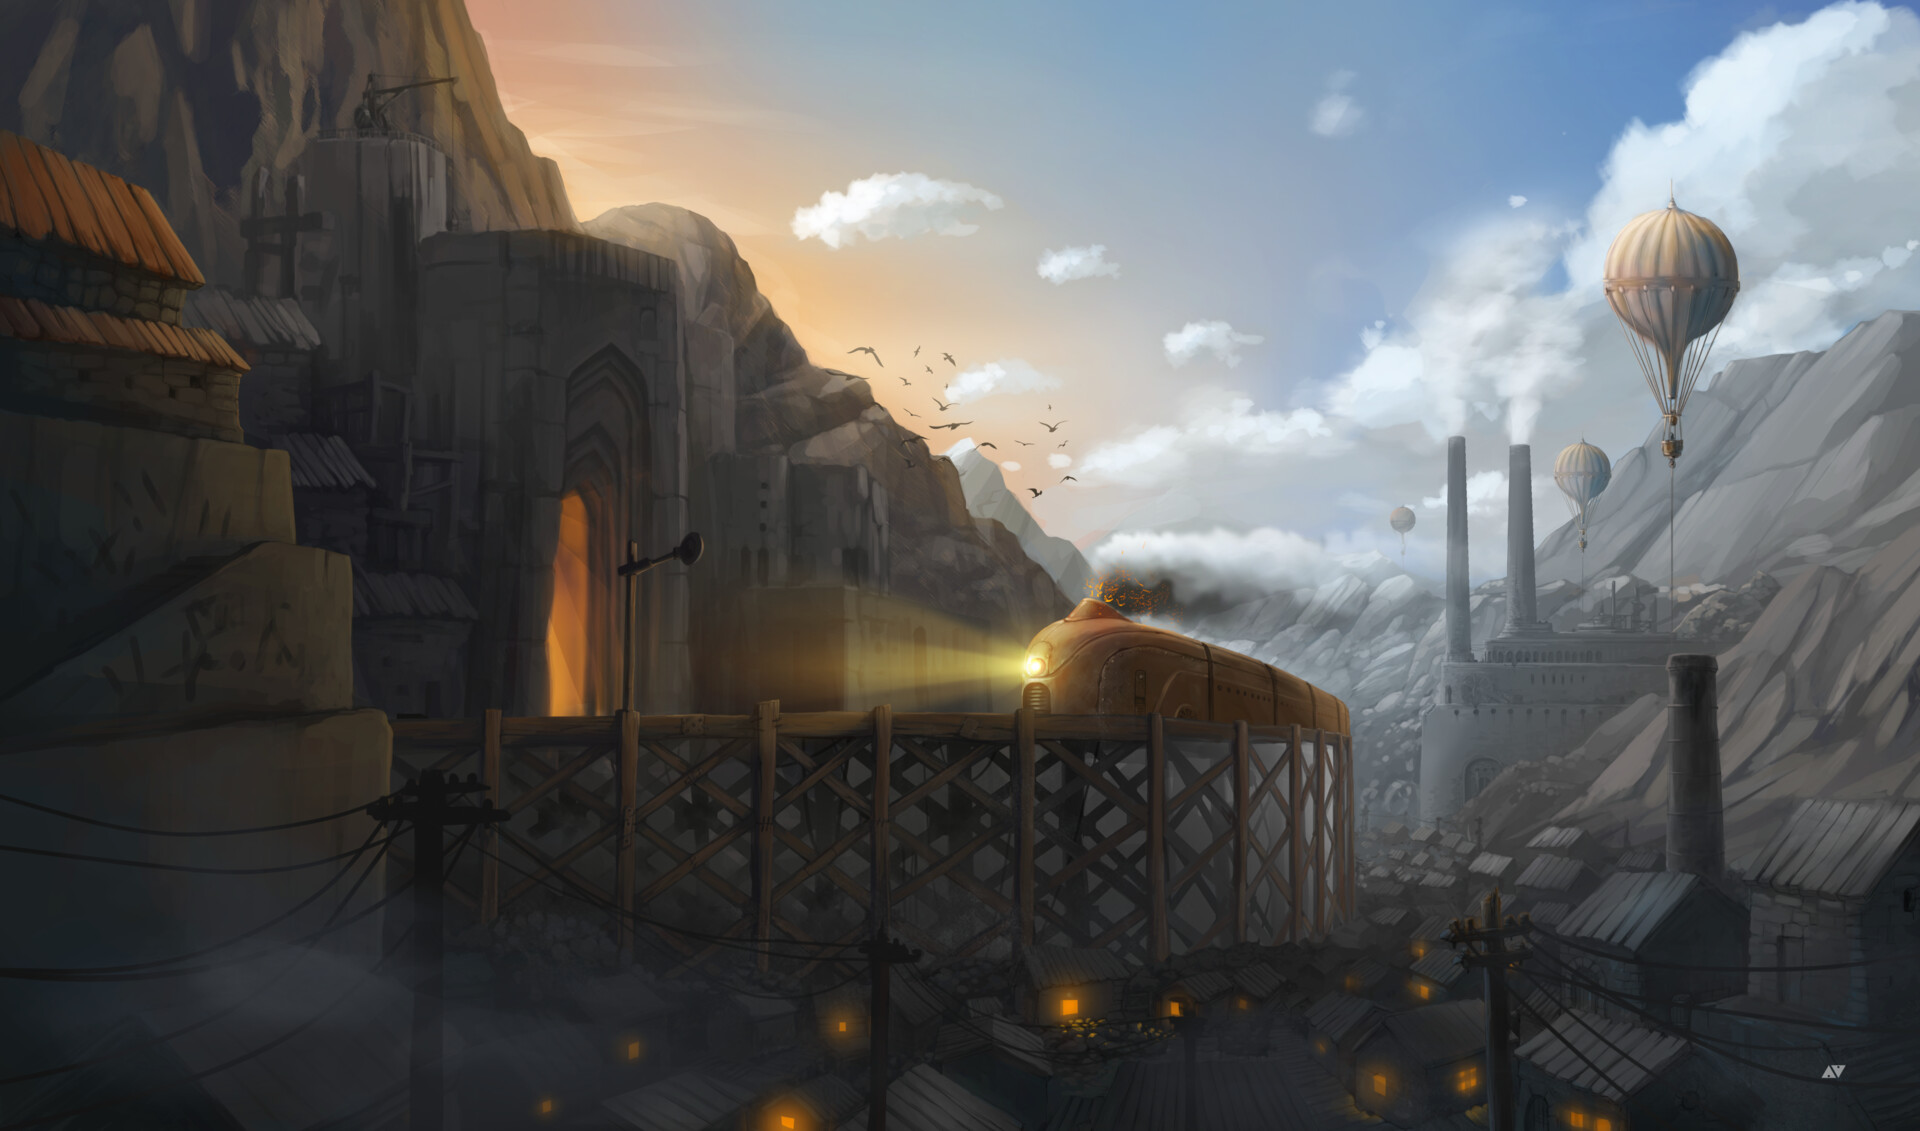 ArtStation - Steampunk environment concept